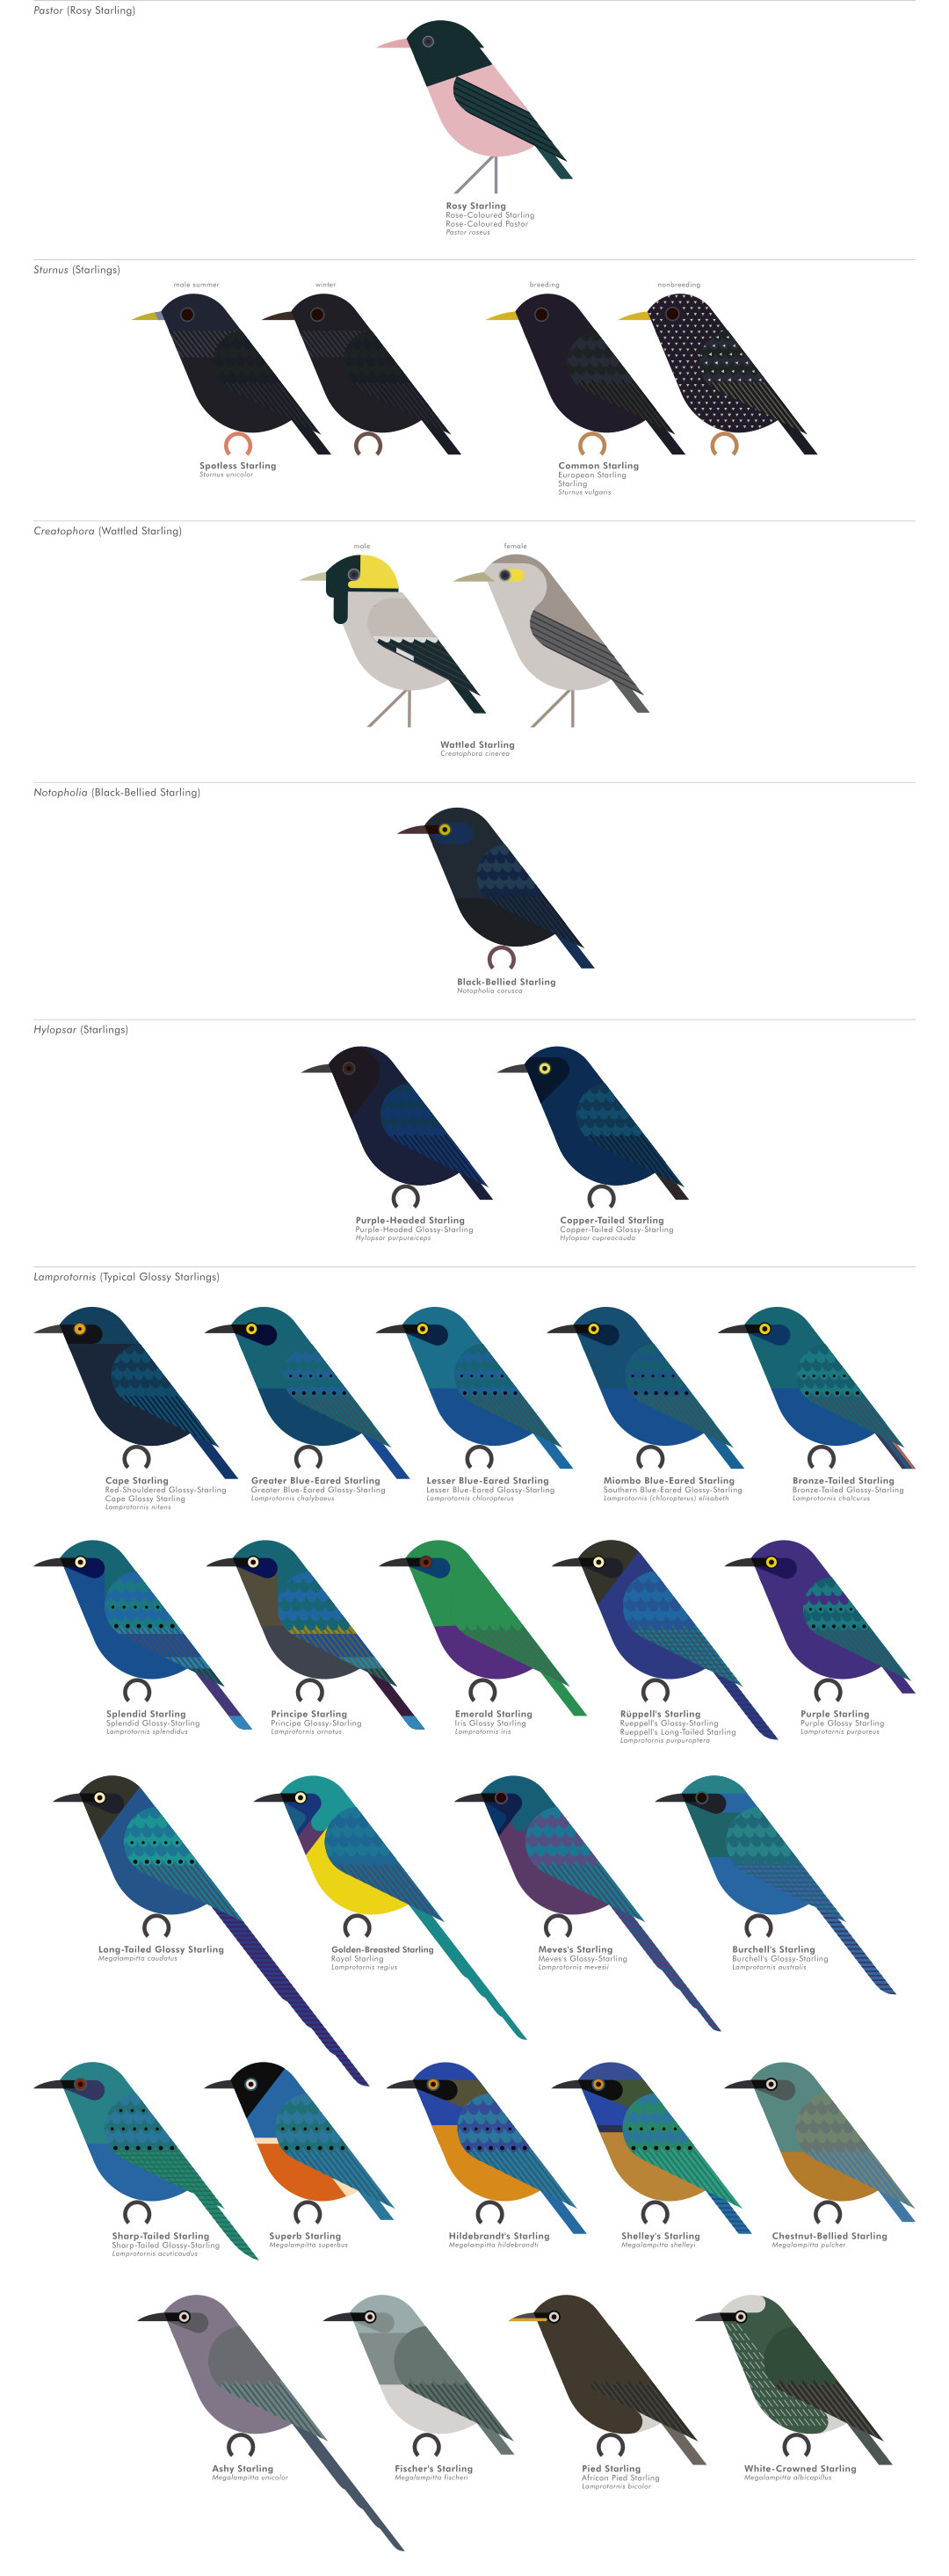 scott partridge - AVE - avian vector encyclopedia - starlings - bird vector art